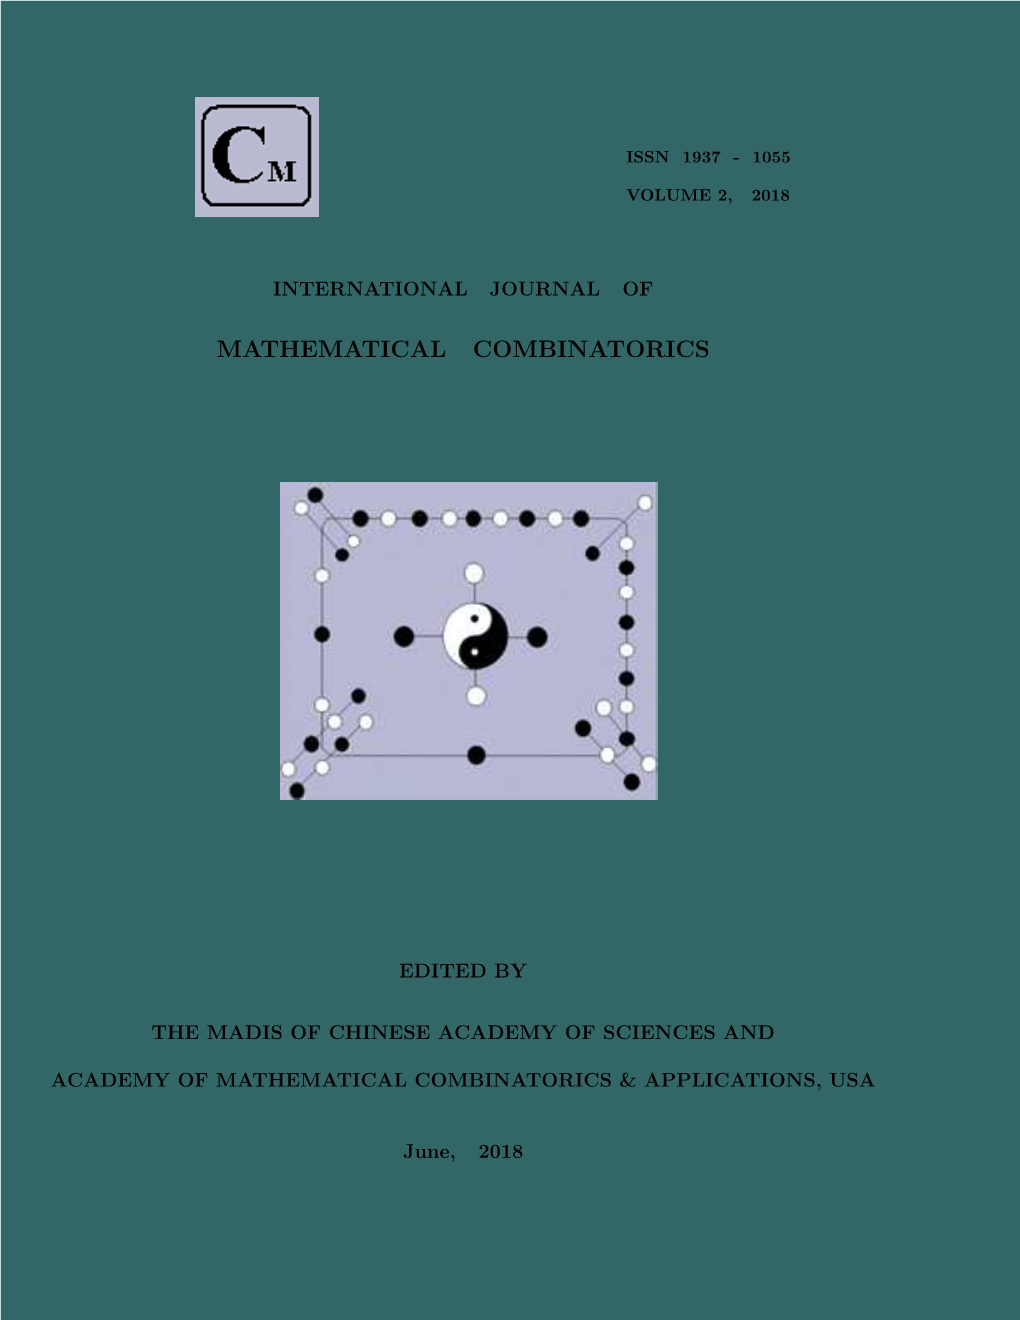 Mathematical Combinatorics